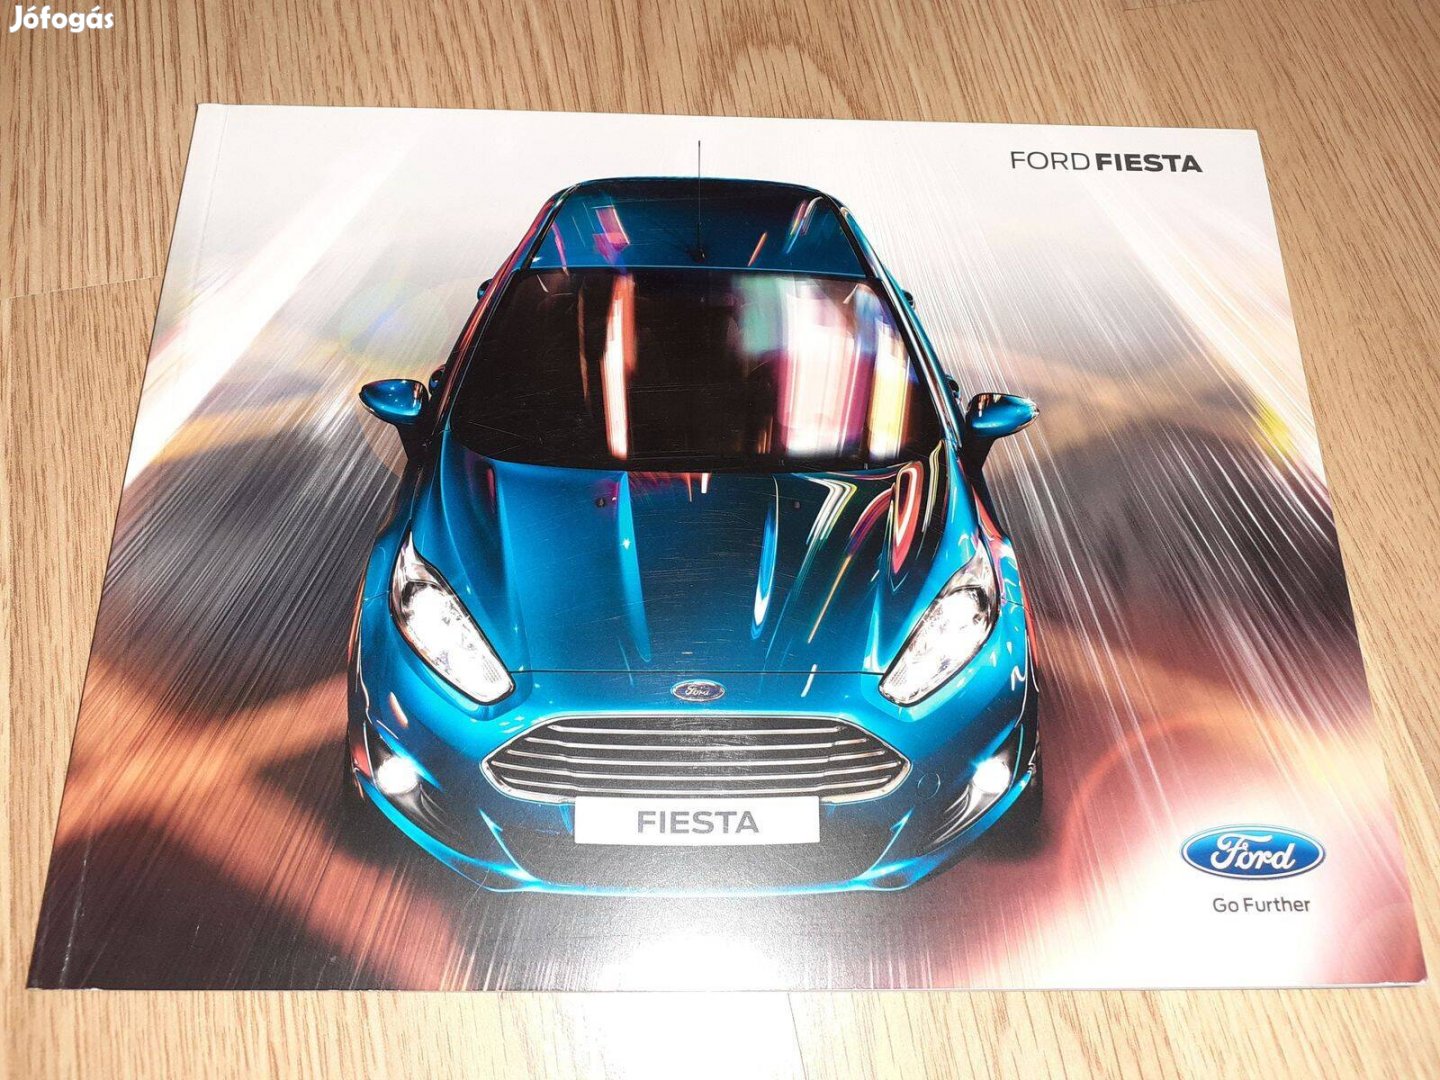 Ford Fiesta prospektus - 2012, magyar nyelvű